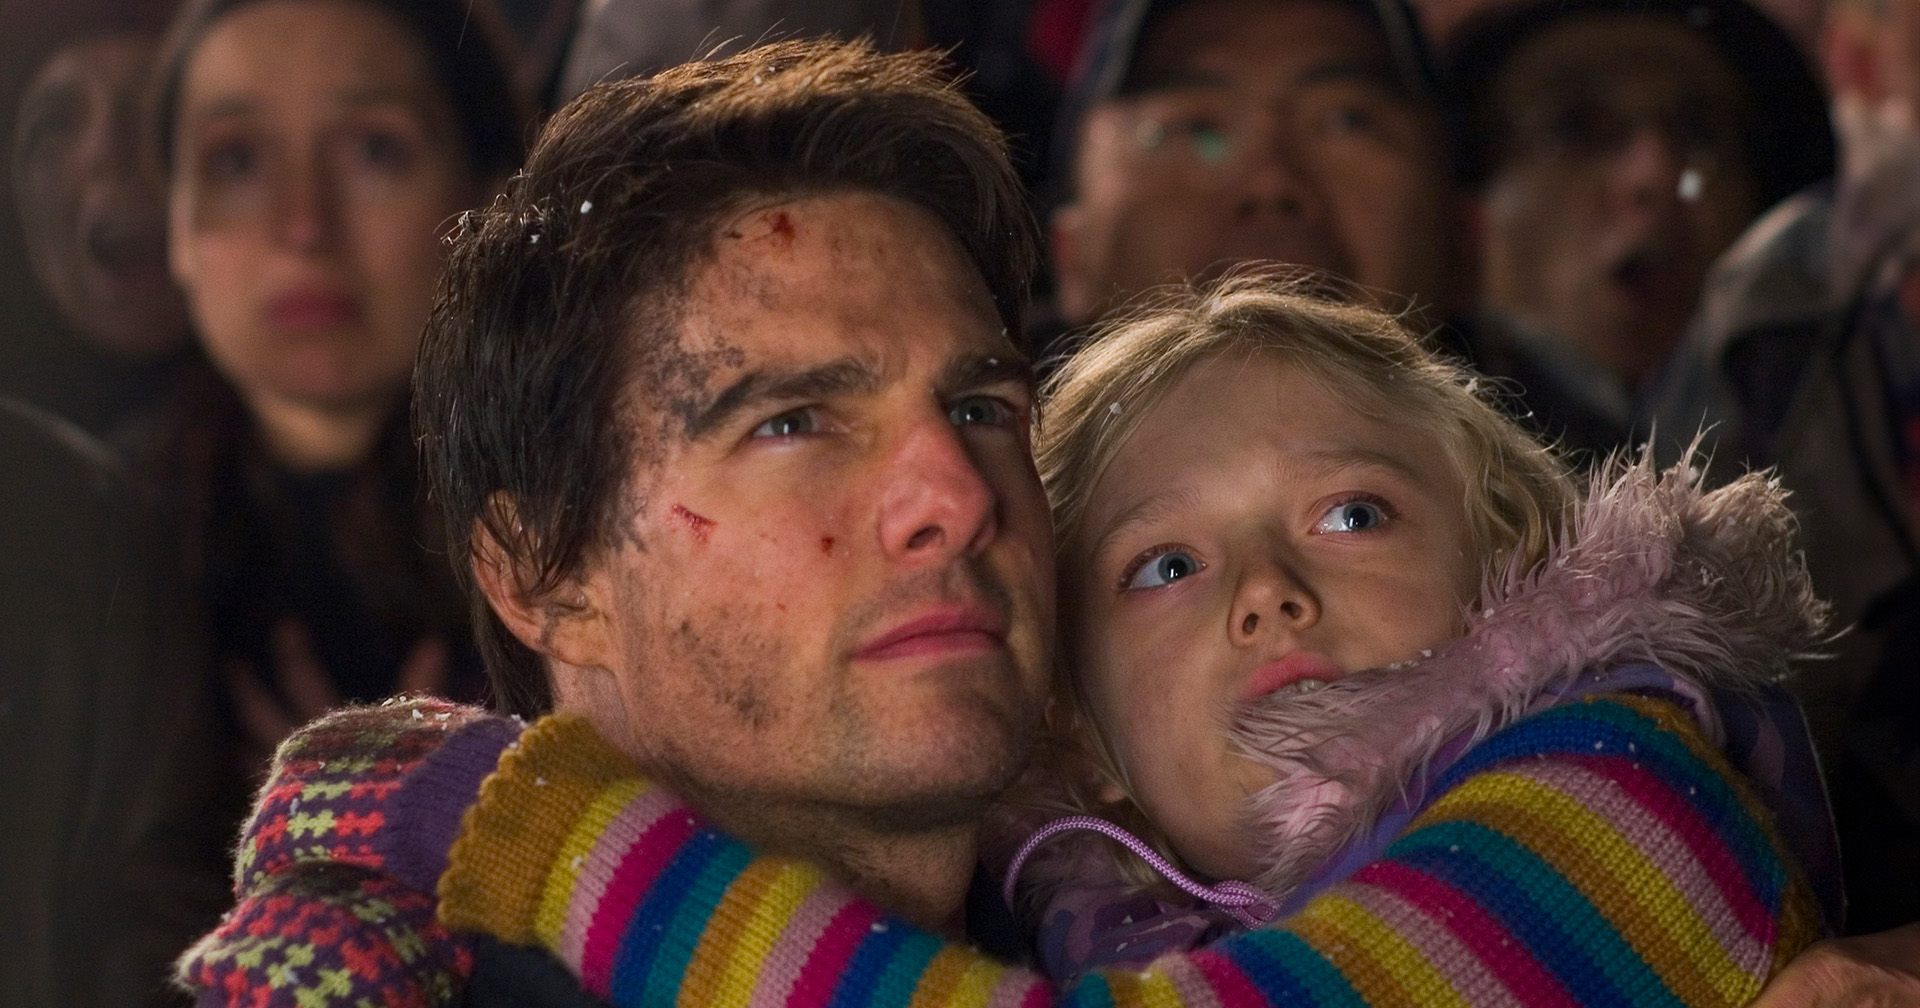 Tom Cruise เคยมอบของขวัญให้ Dakota Fanning ในกองถ่าย ‘War of the Worlds’ และยังส่งของขวัญวันเกิดให้ทุกปีจนถึงปัจจุบัน